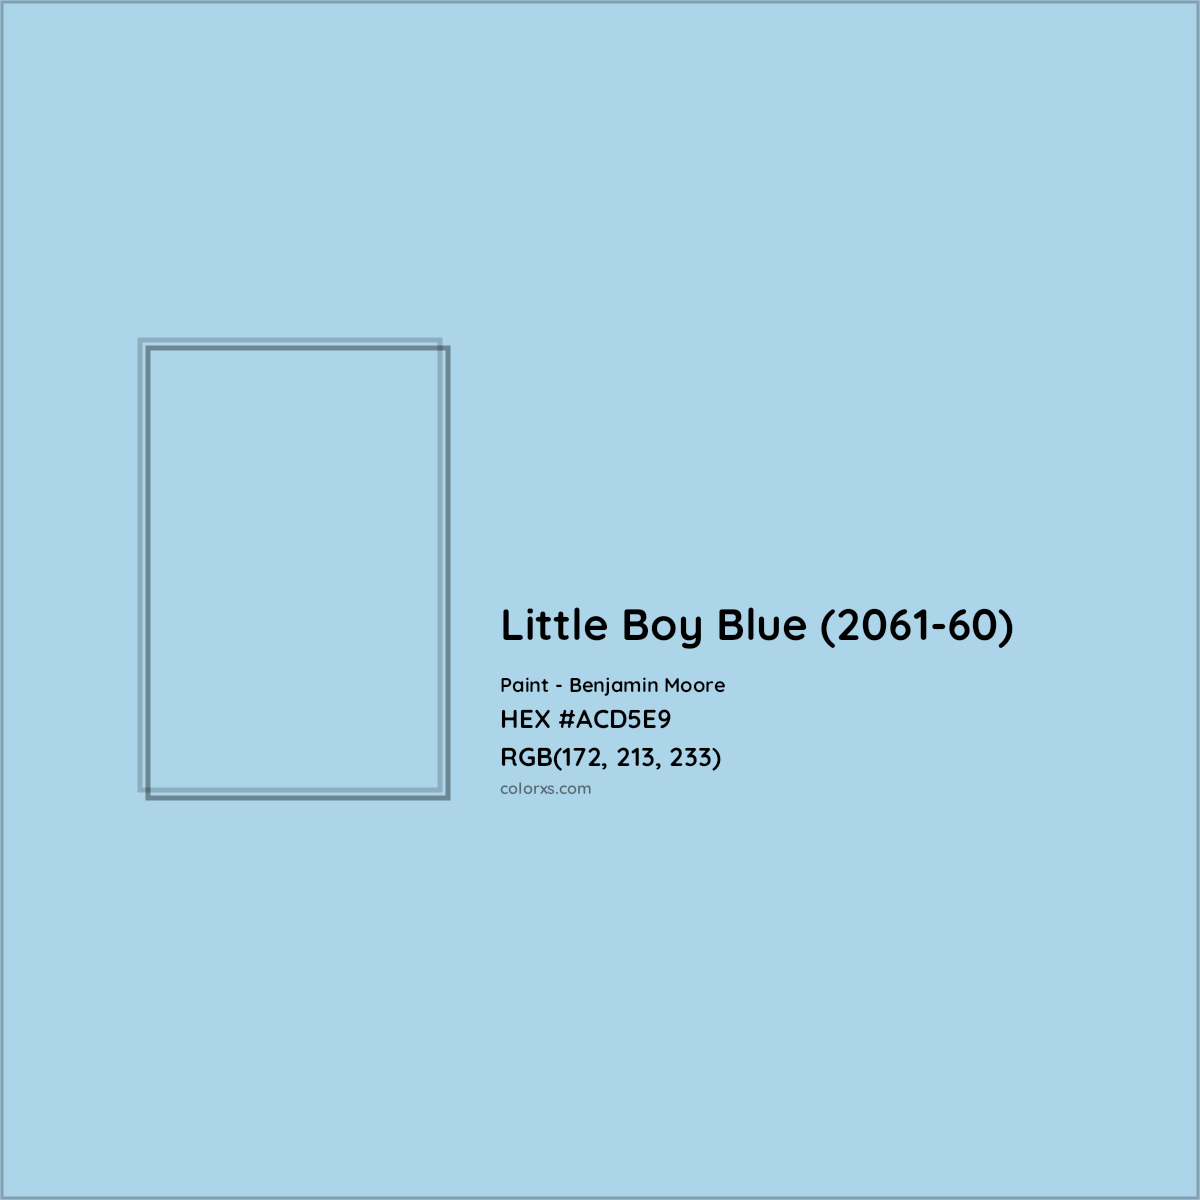 HEX #ACD5E9 Little Boy Blue (2061-60) Paint Benjamin Moore - Color Code